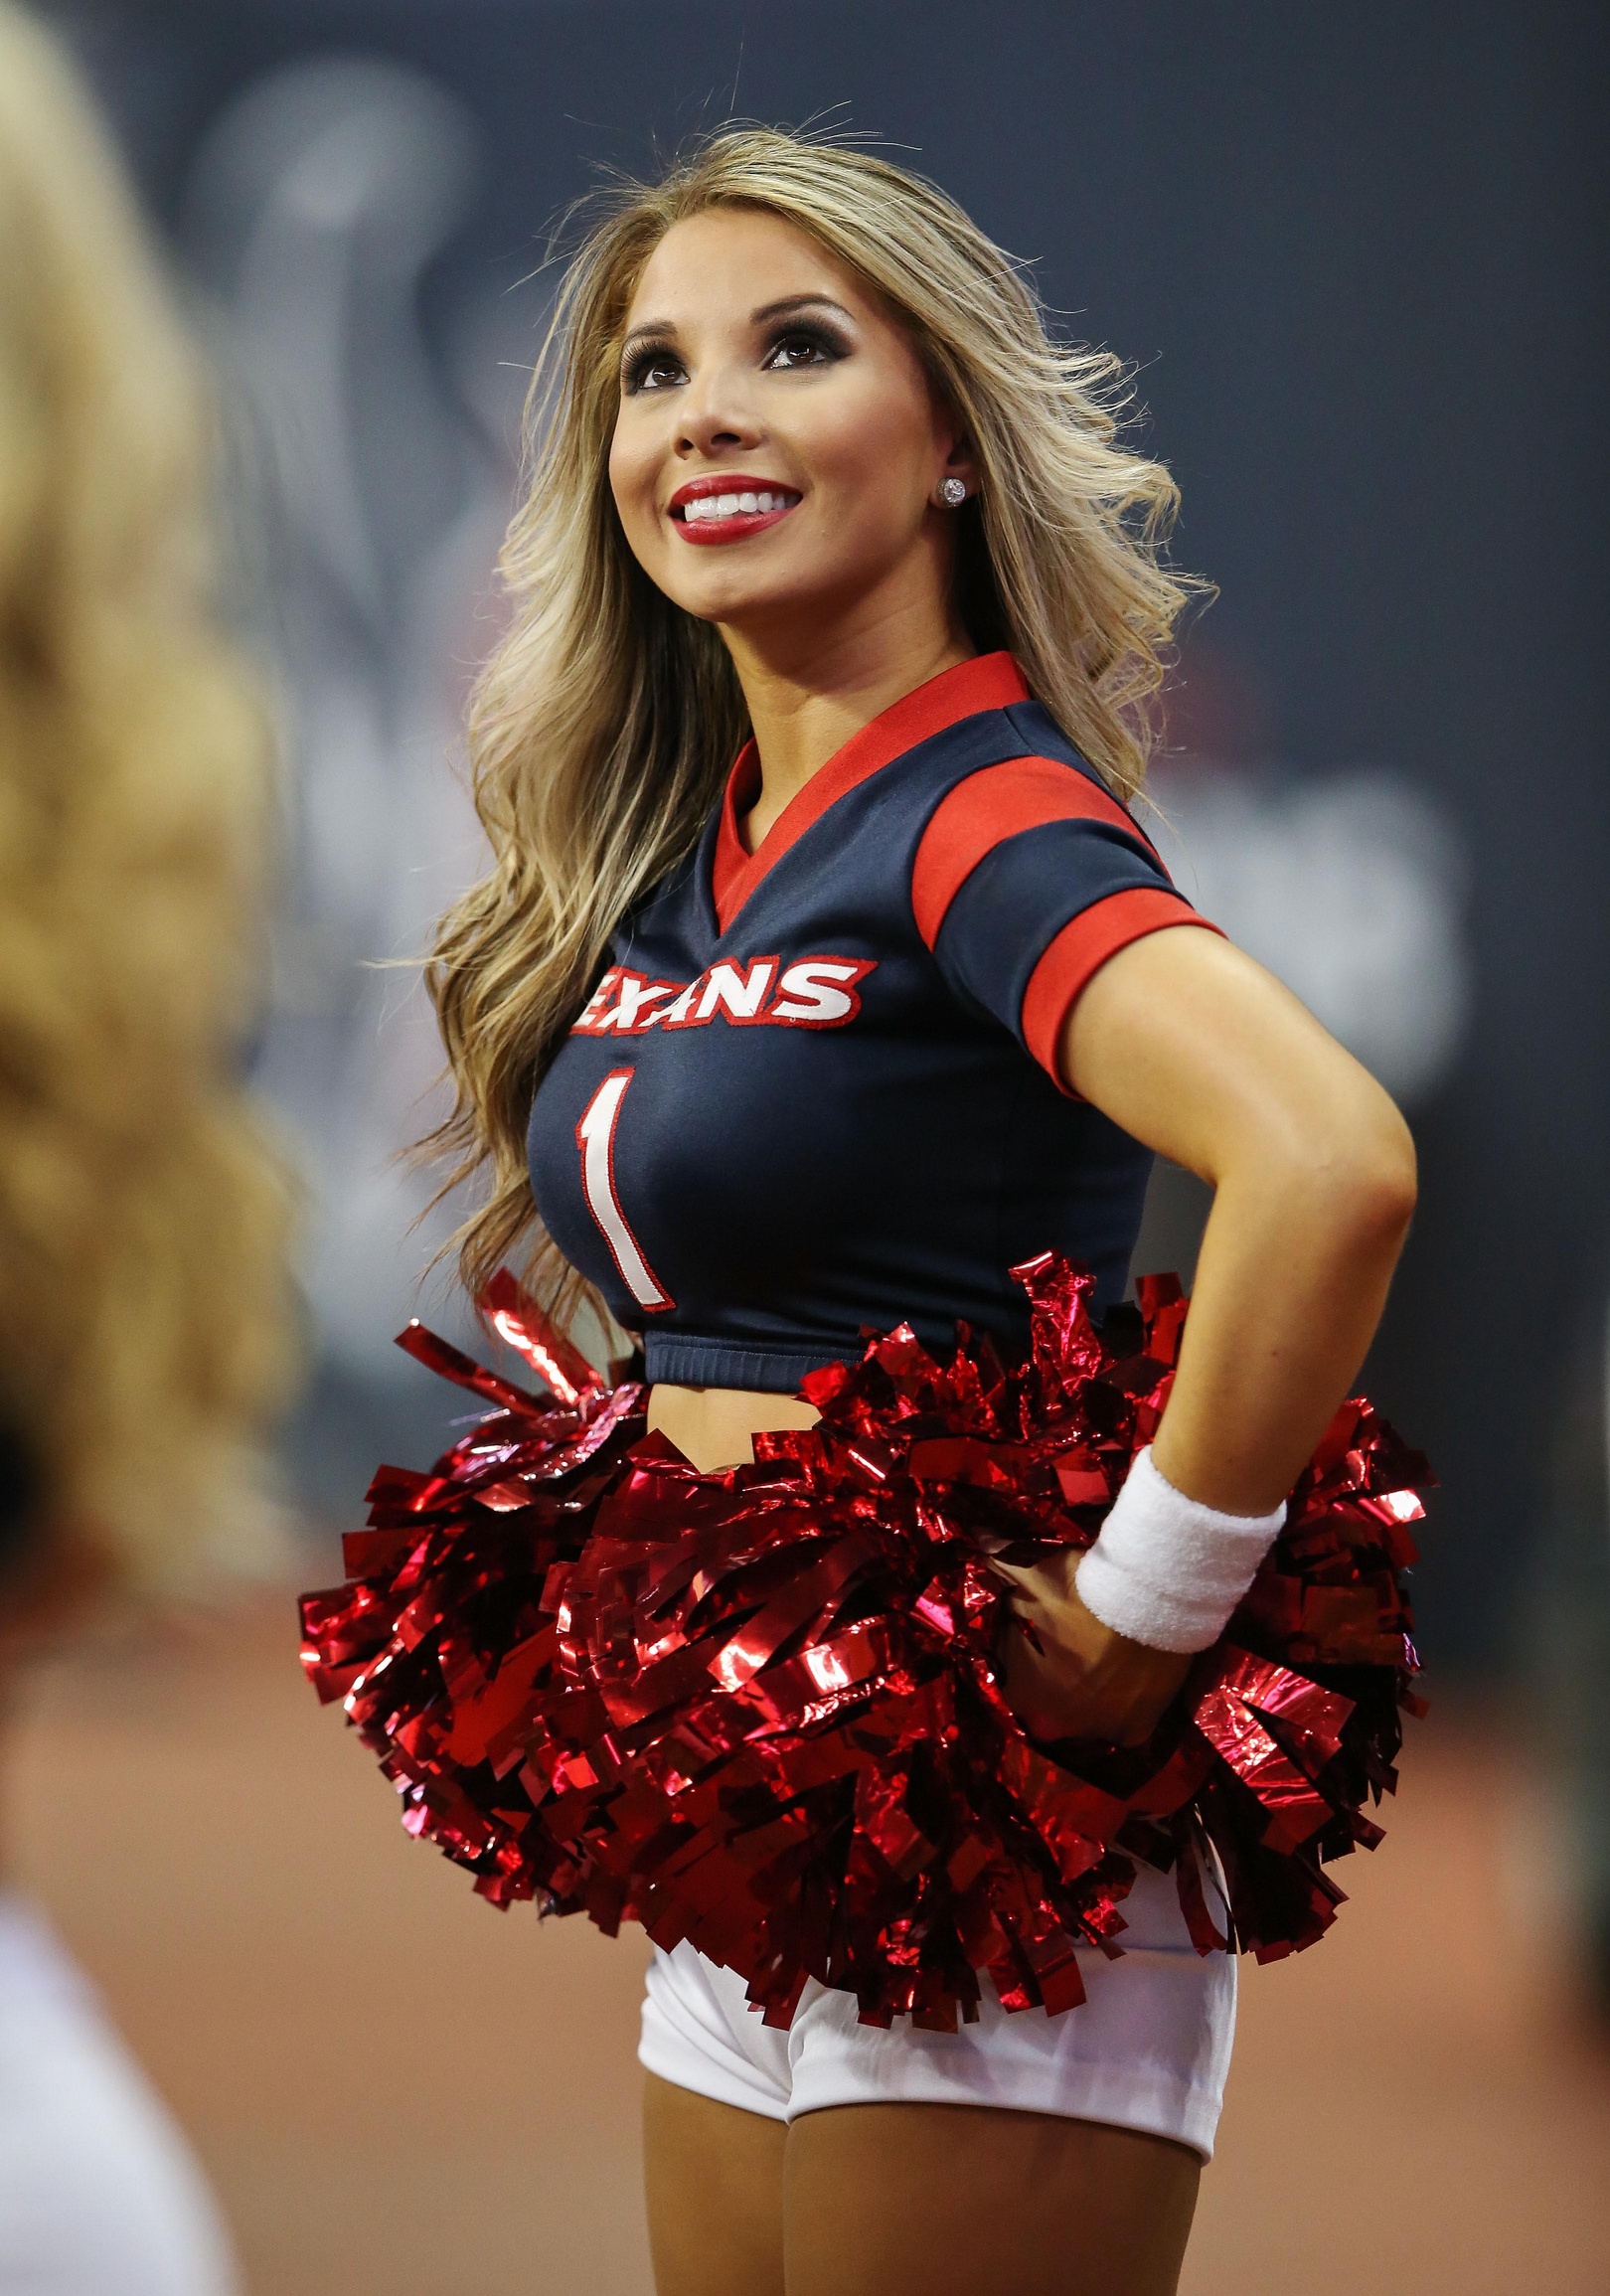 Houston Texans Cheerleader Photo Of The Day